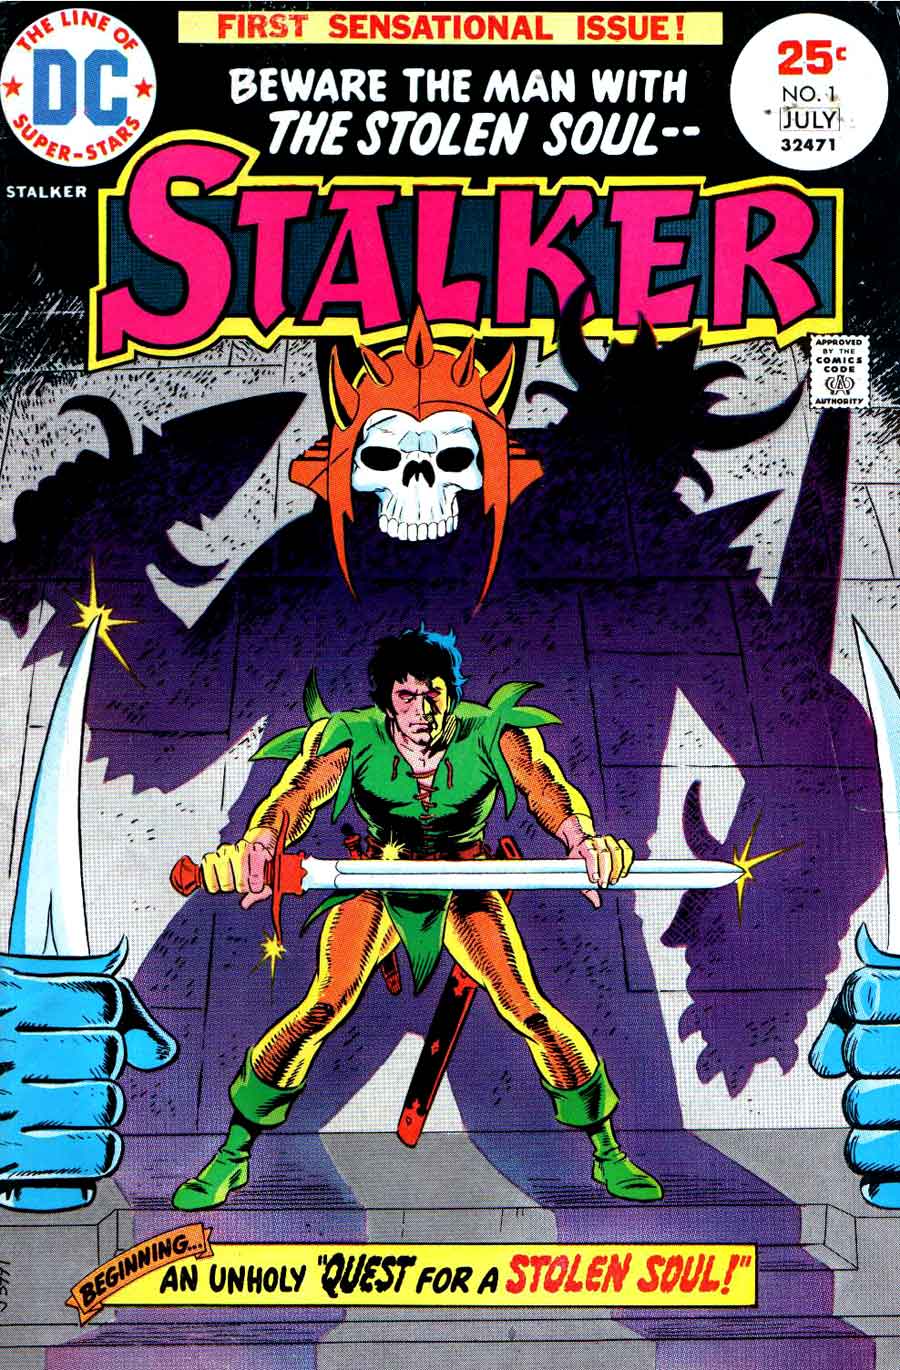 Stalker v1 #1 dc bronze age comic book cover art by Steve Ditko, Wally Wood